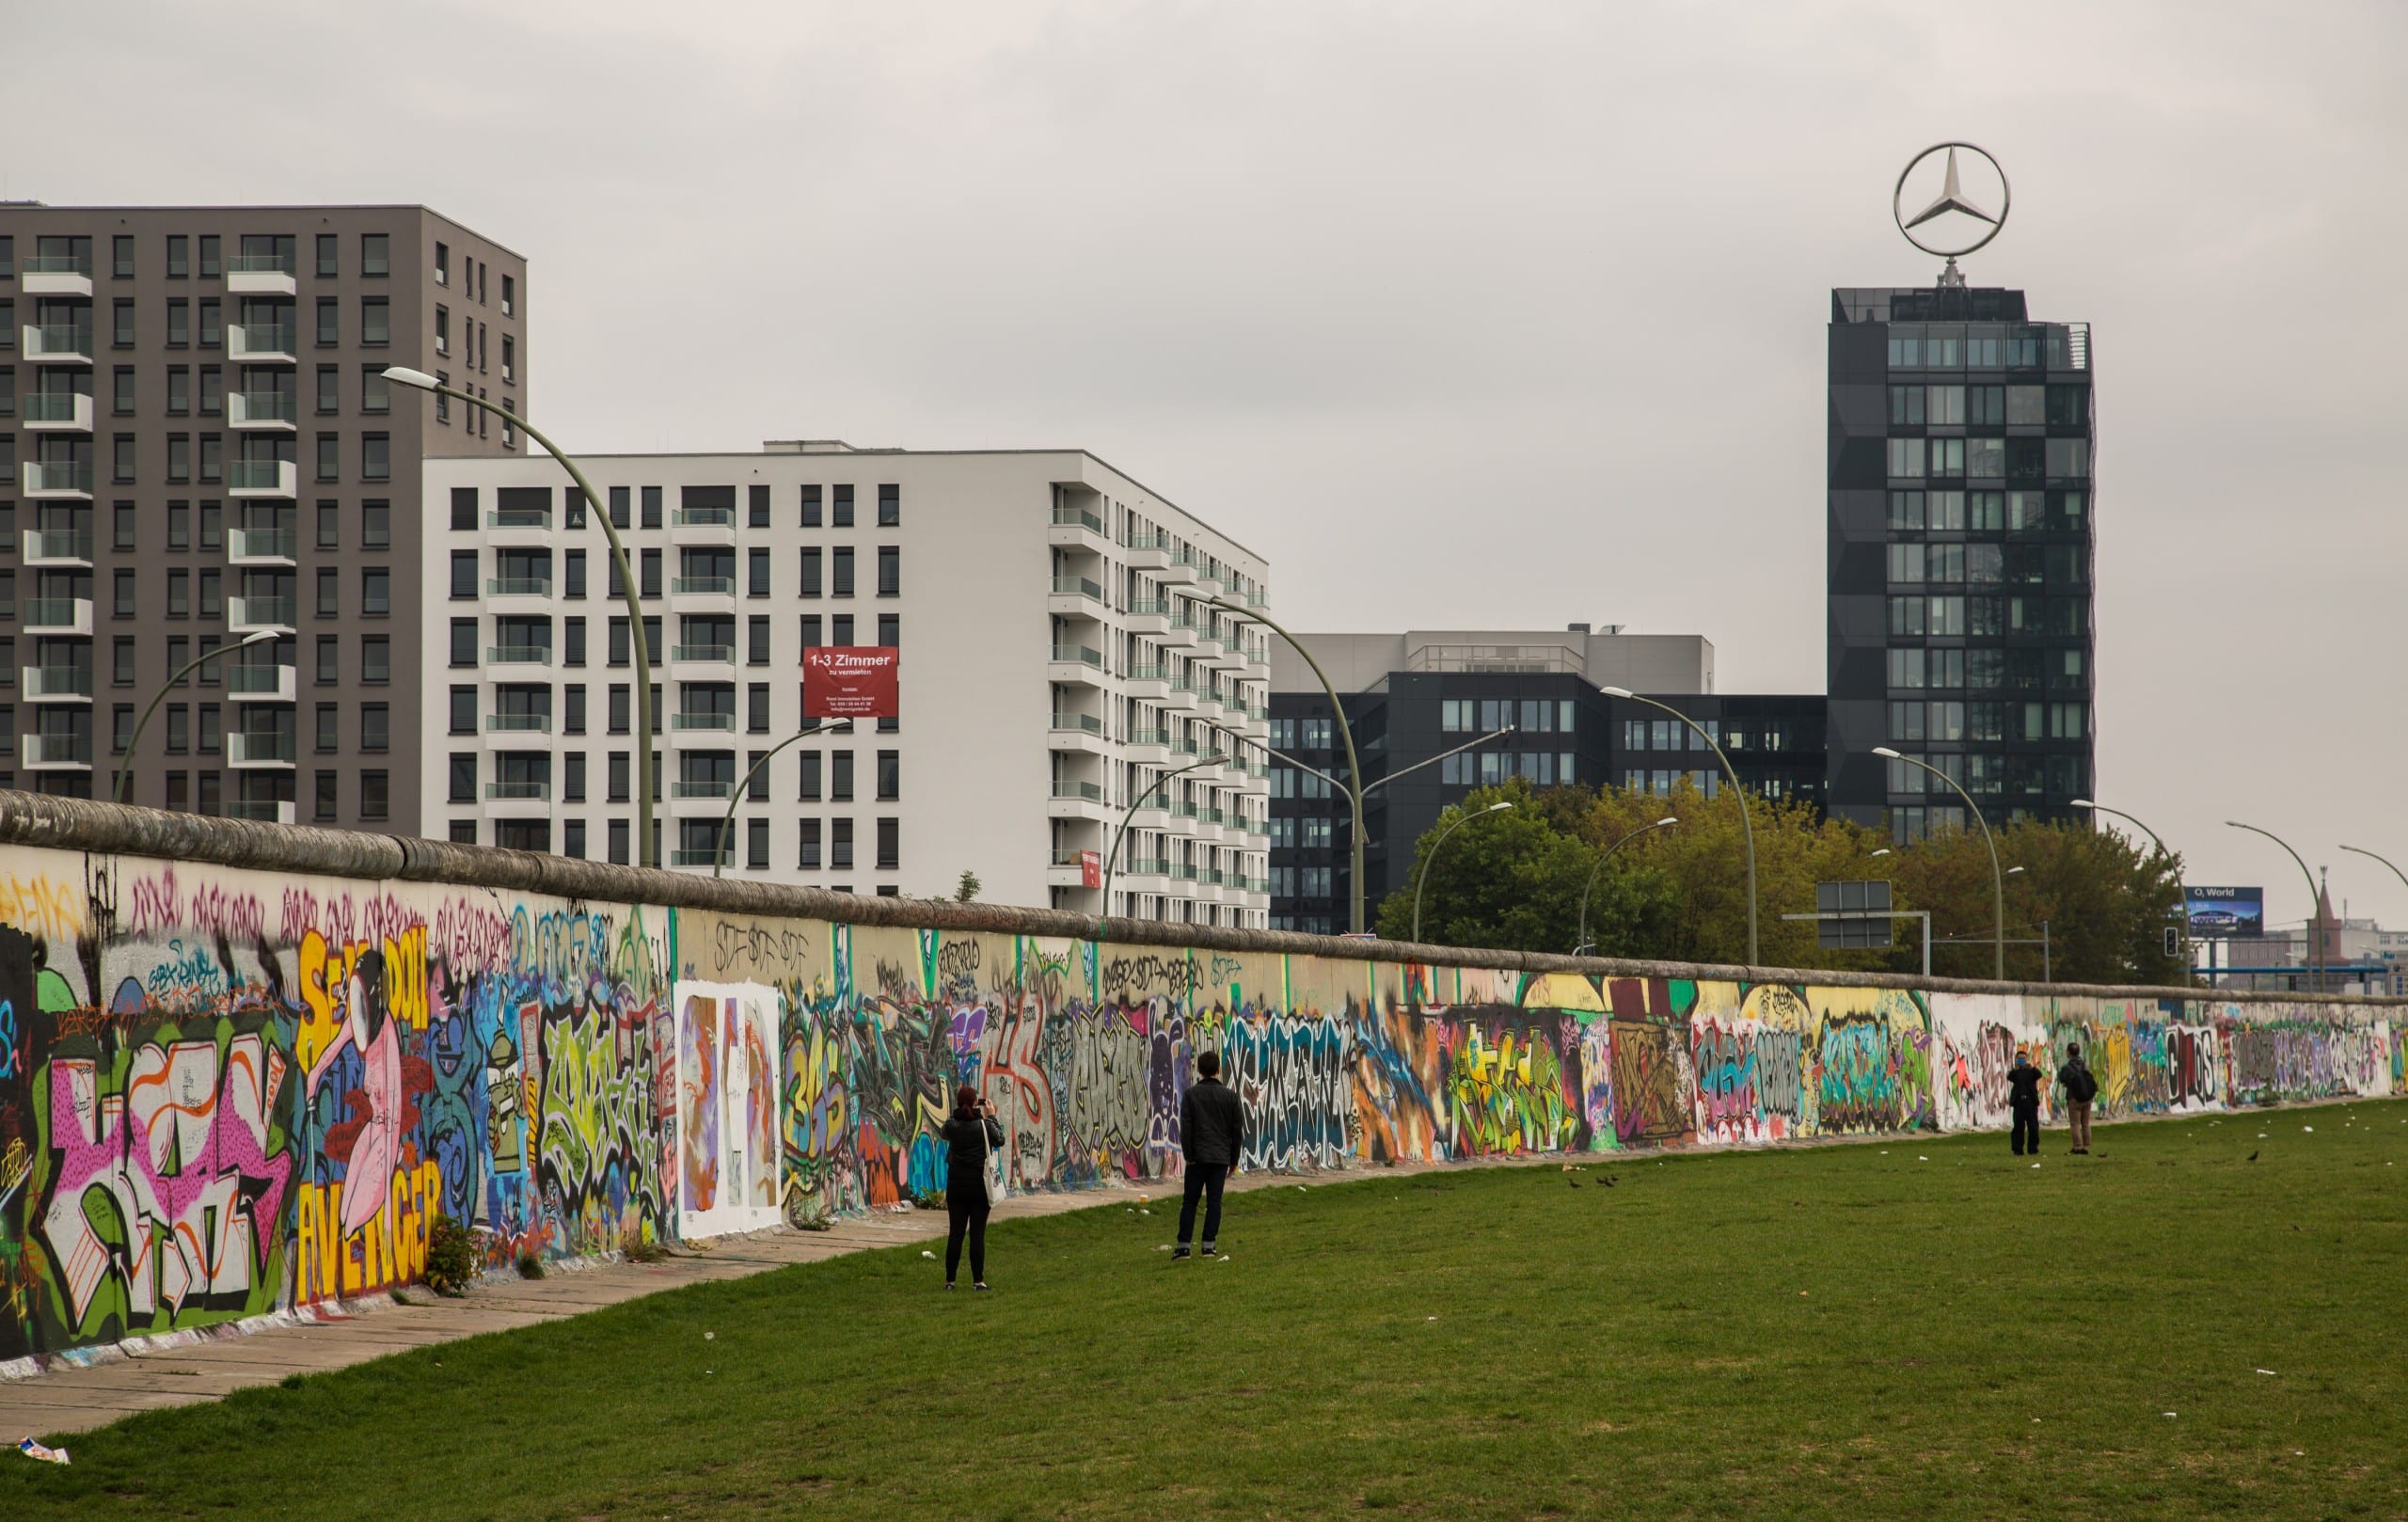 Die Mauer um West-Berlin war insgesamt über 156 Kilometer lang. Bildquelle: Tony Webster from Portland, Oregon, United States, CC BY 2.0 , via Wikimedia Commons